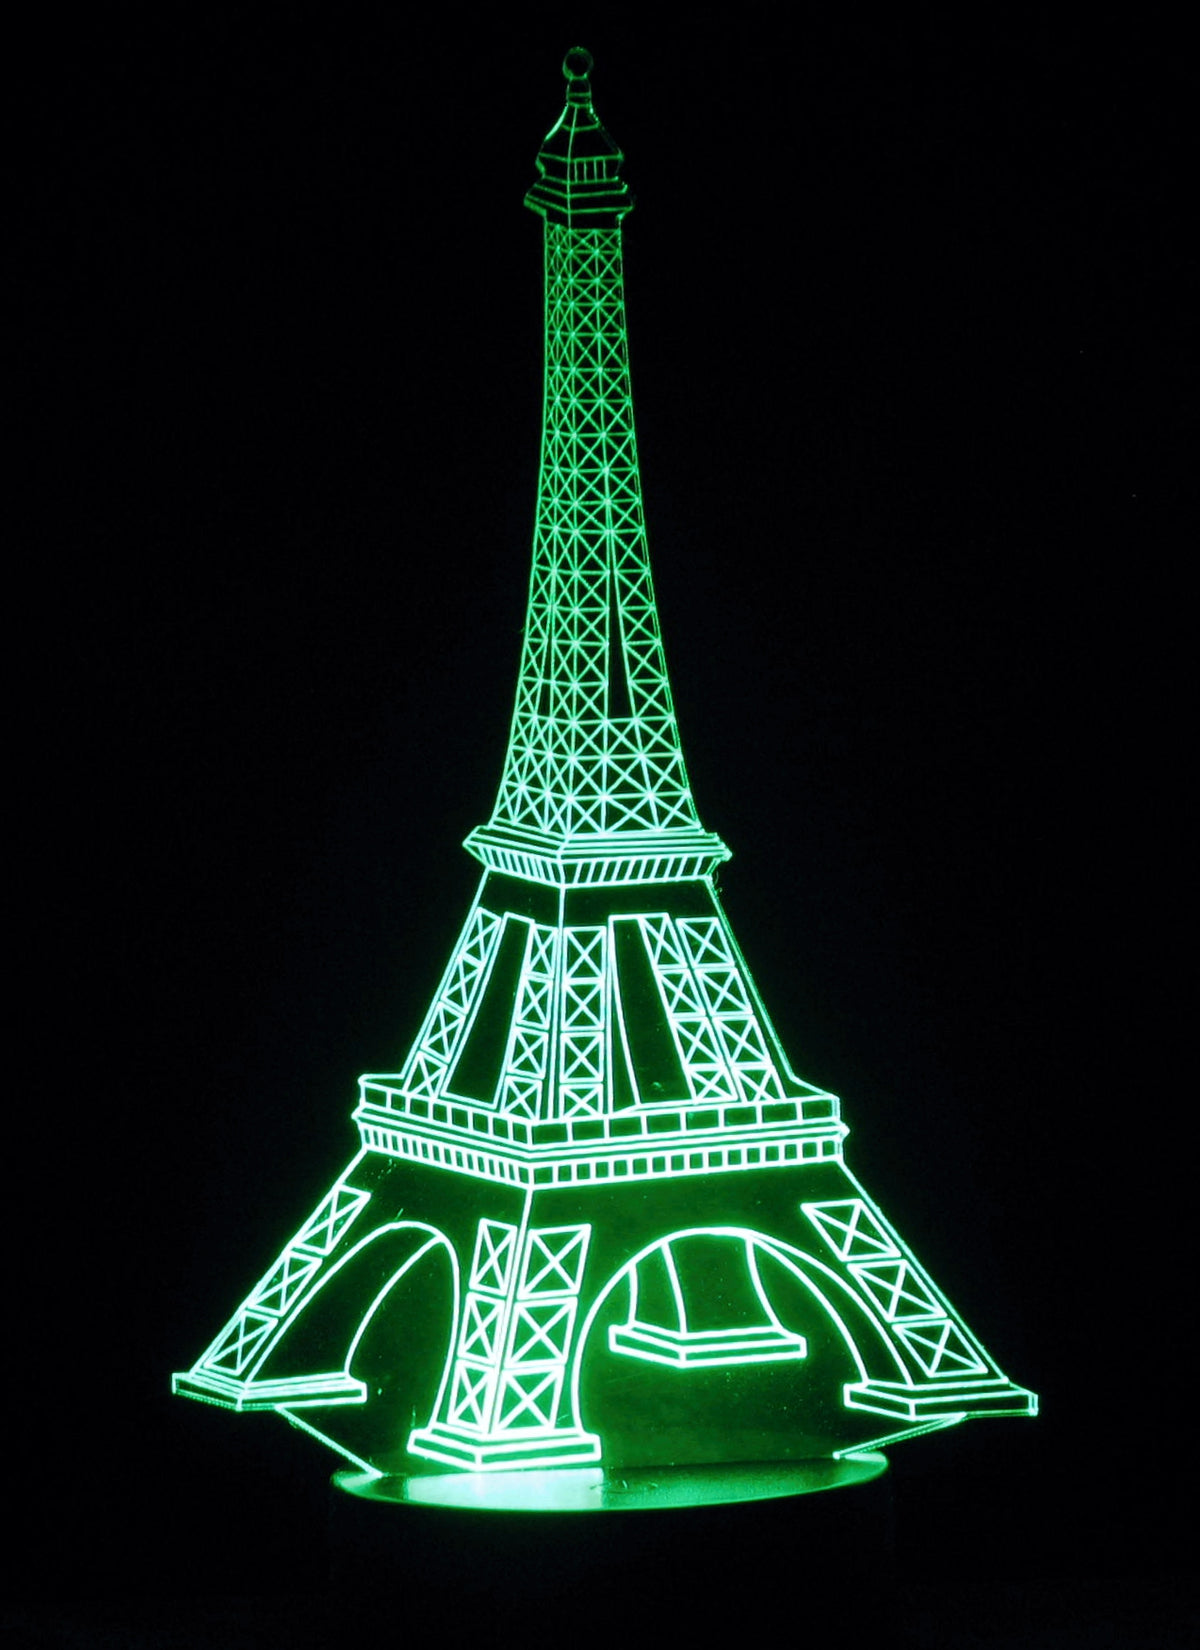 Eiffel Tower LED Desk, Table, Night Lamp